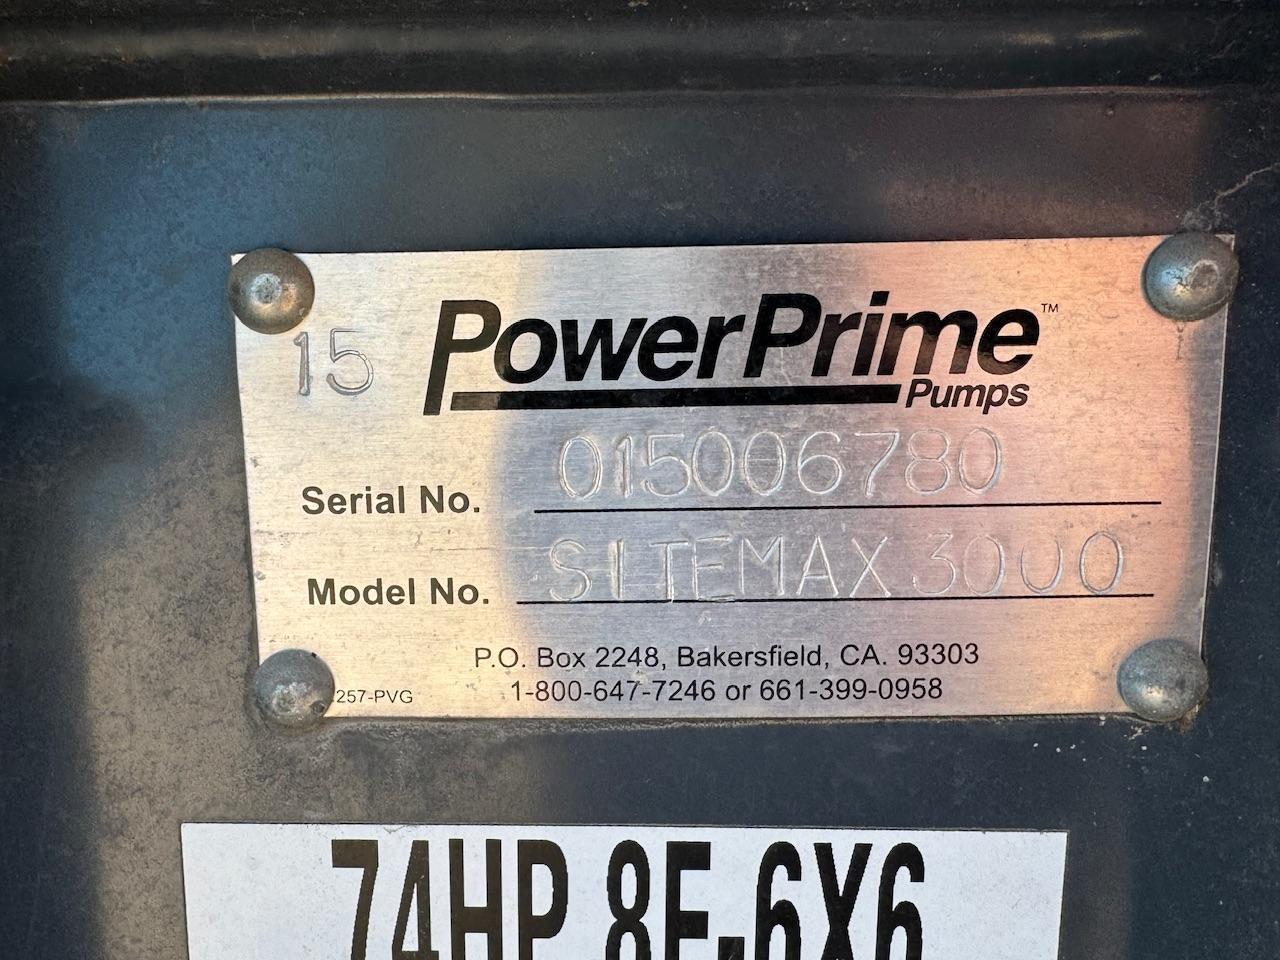 2015 Power Prime Sitemax 3000